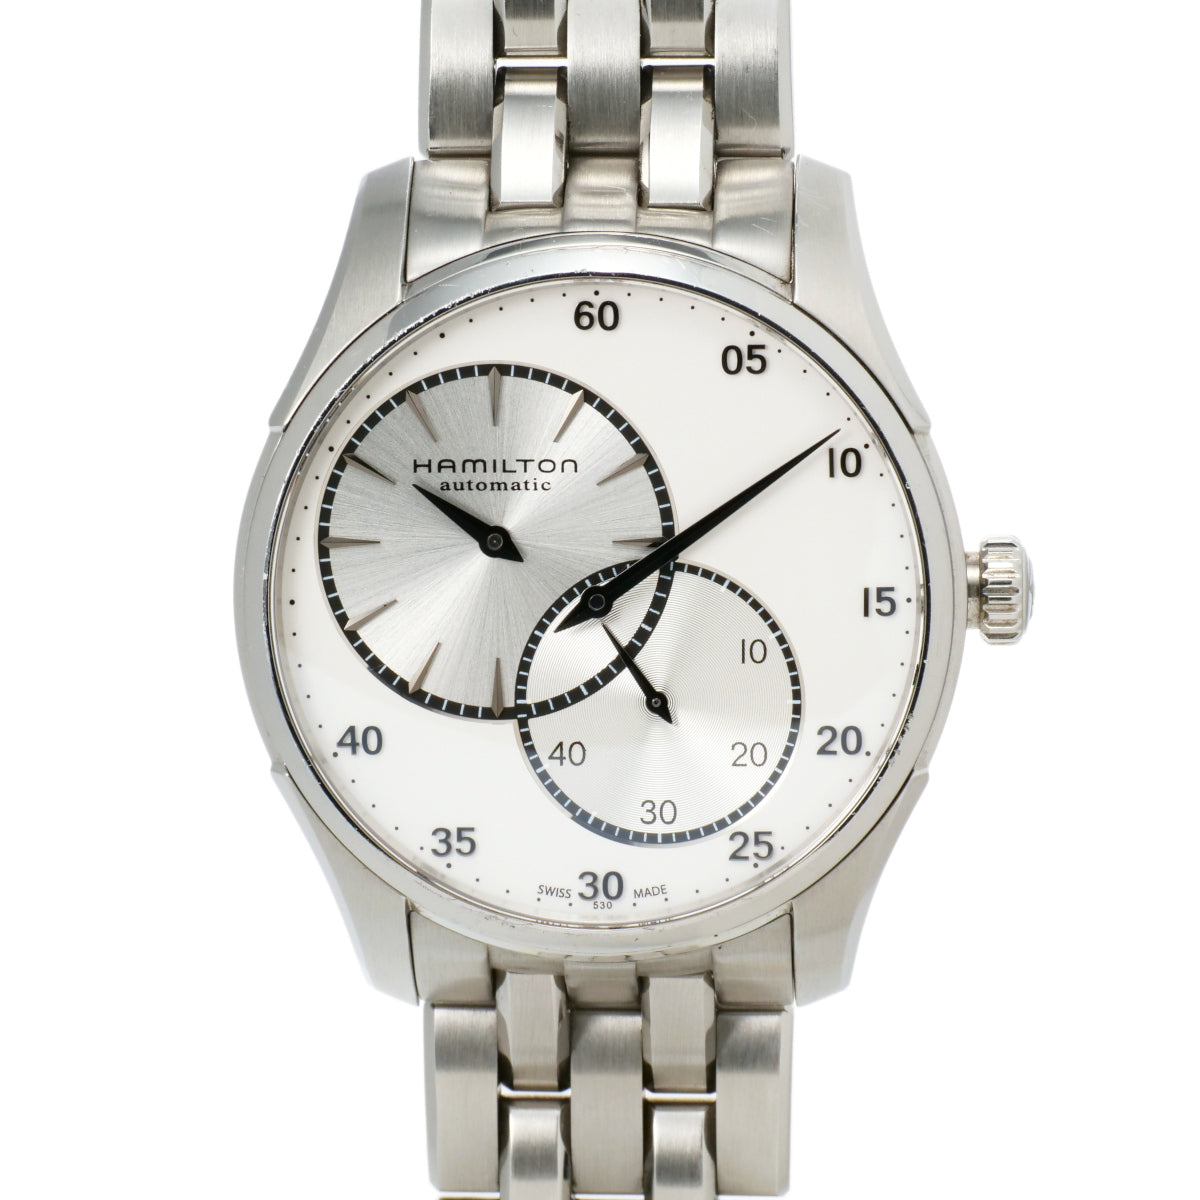 Hamilton Jazzmaster Regulator H426150 Men's Automatic Watch, Stainless Steel Silver H426150